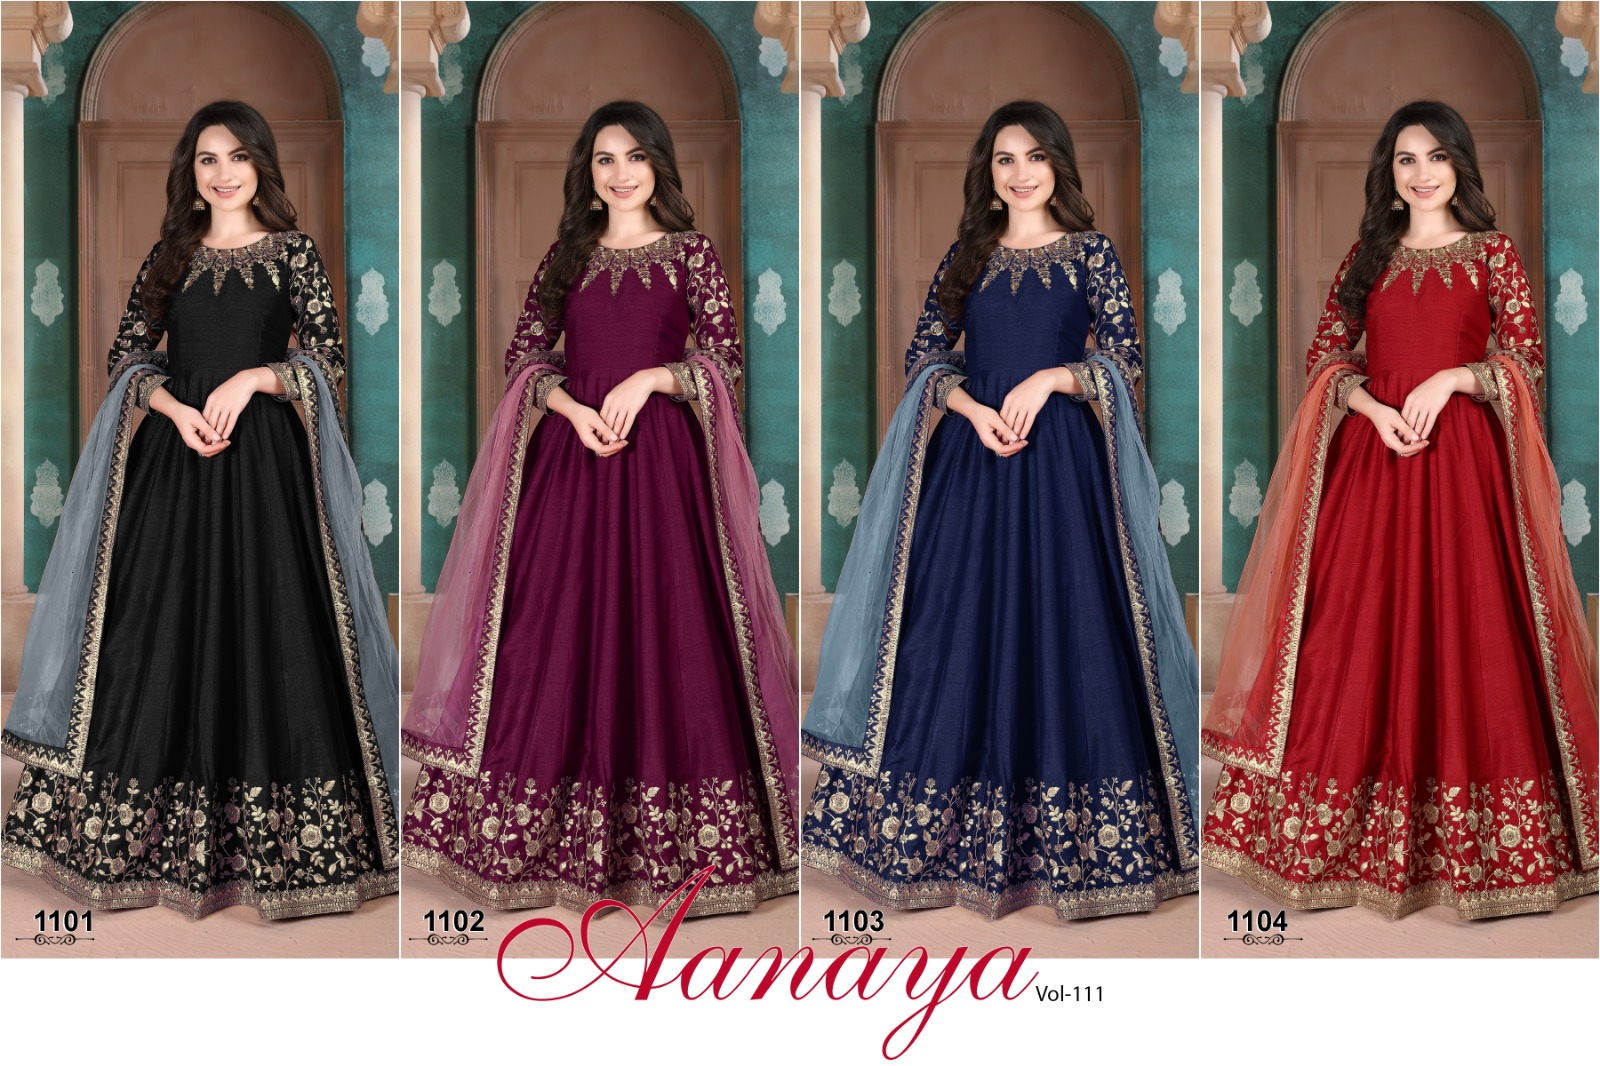 Dani Fashion Aanaya Vol 111 collection 2